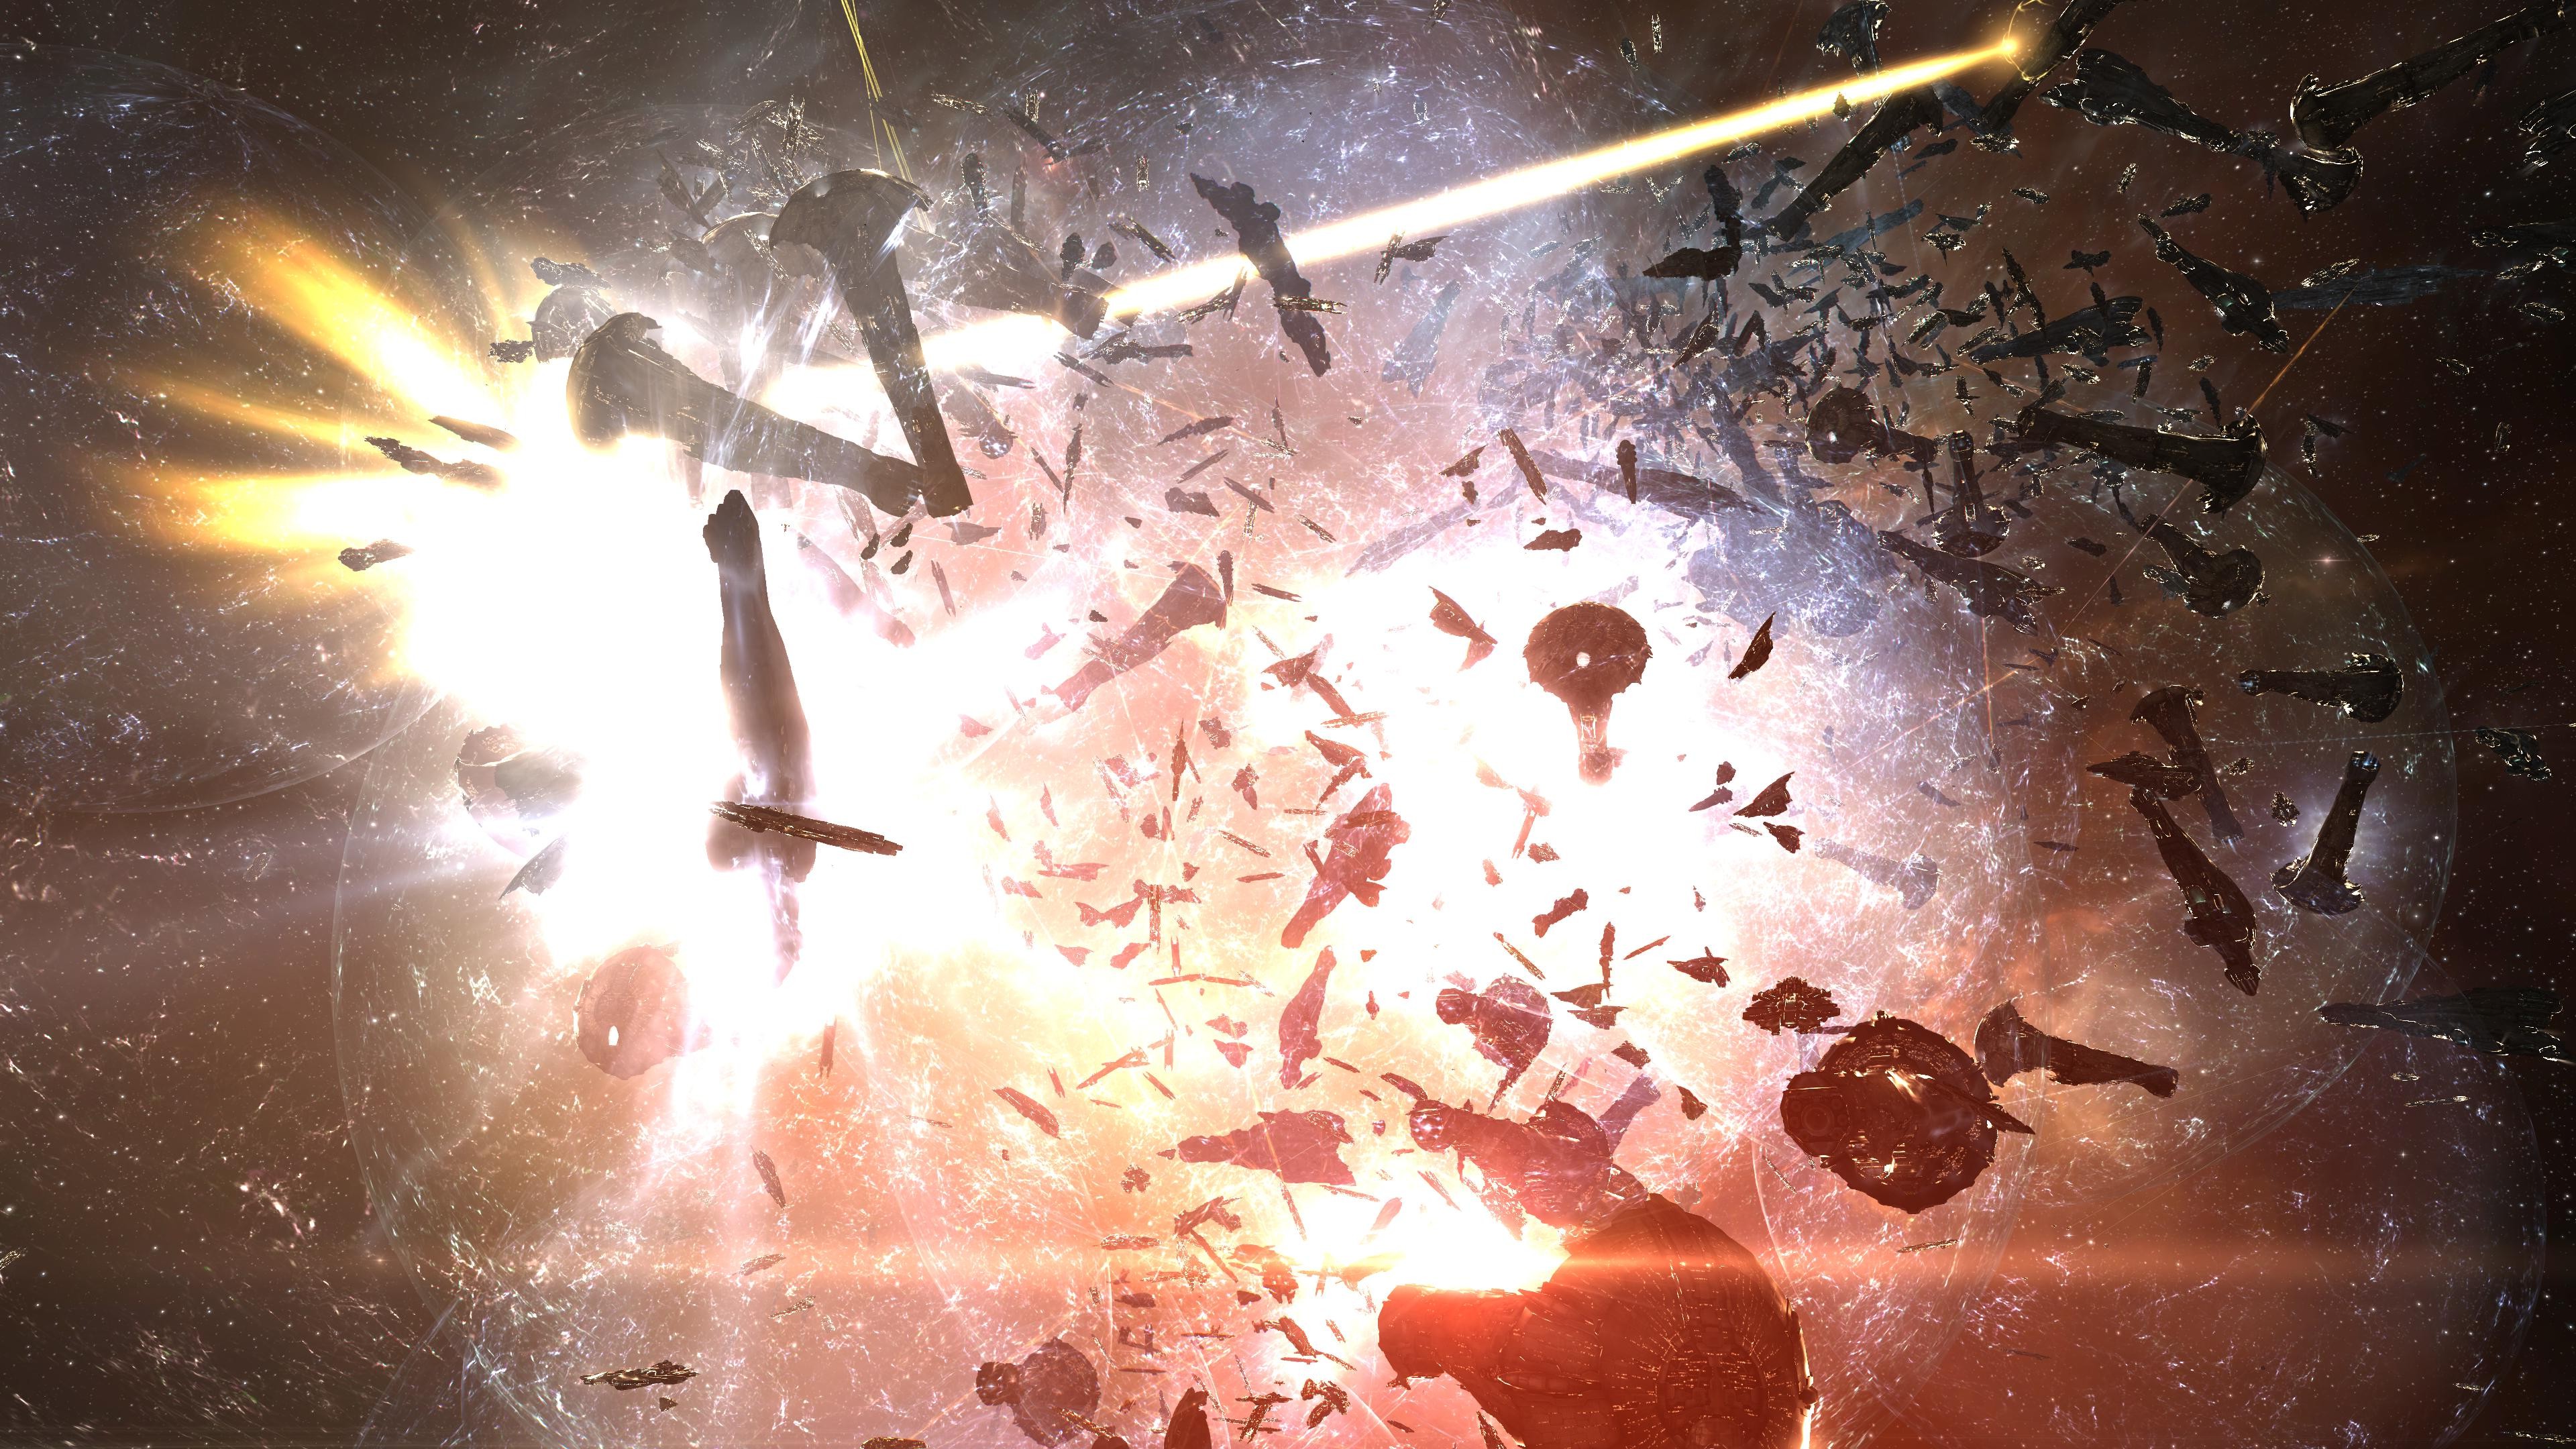 Eve Online Space Spaceship Battle Wallpaper HD